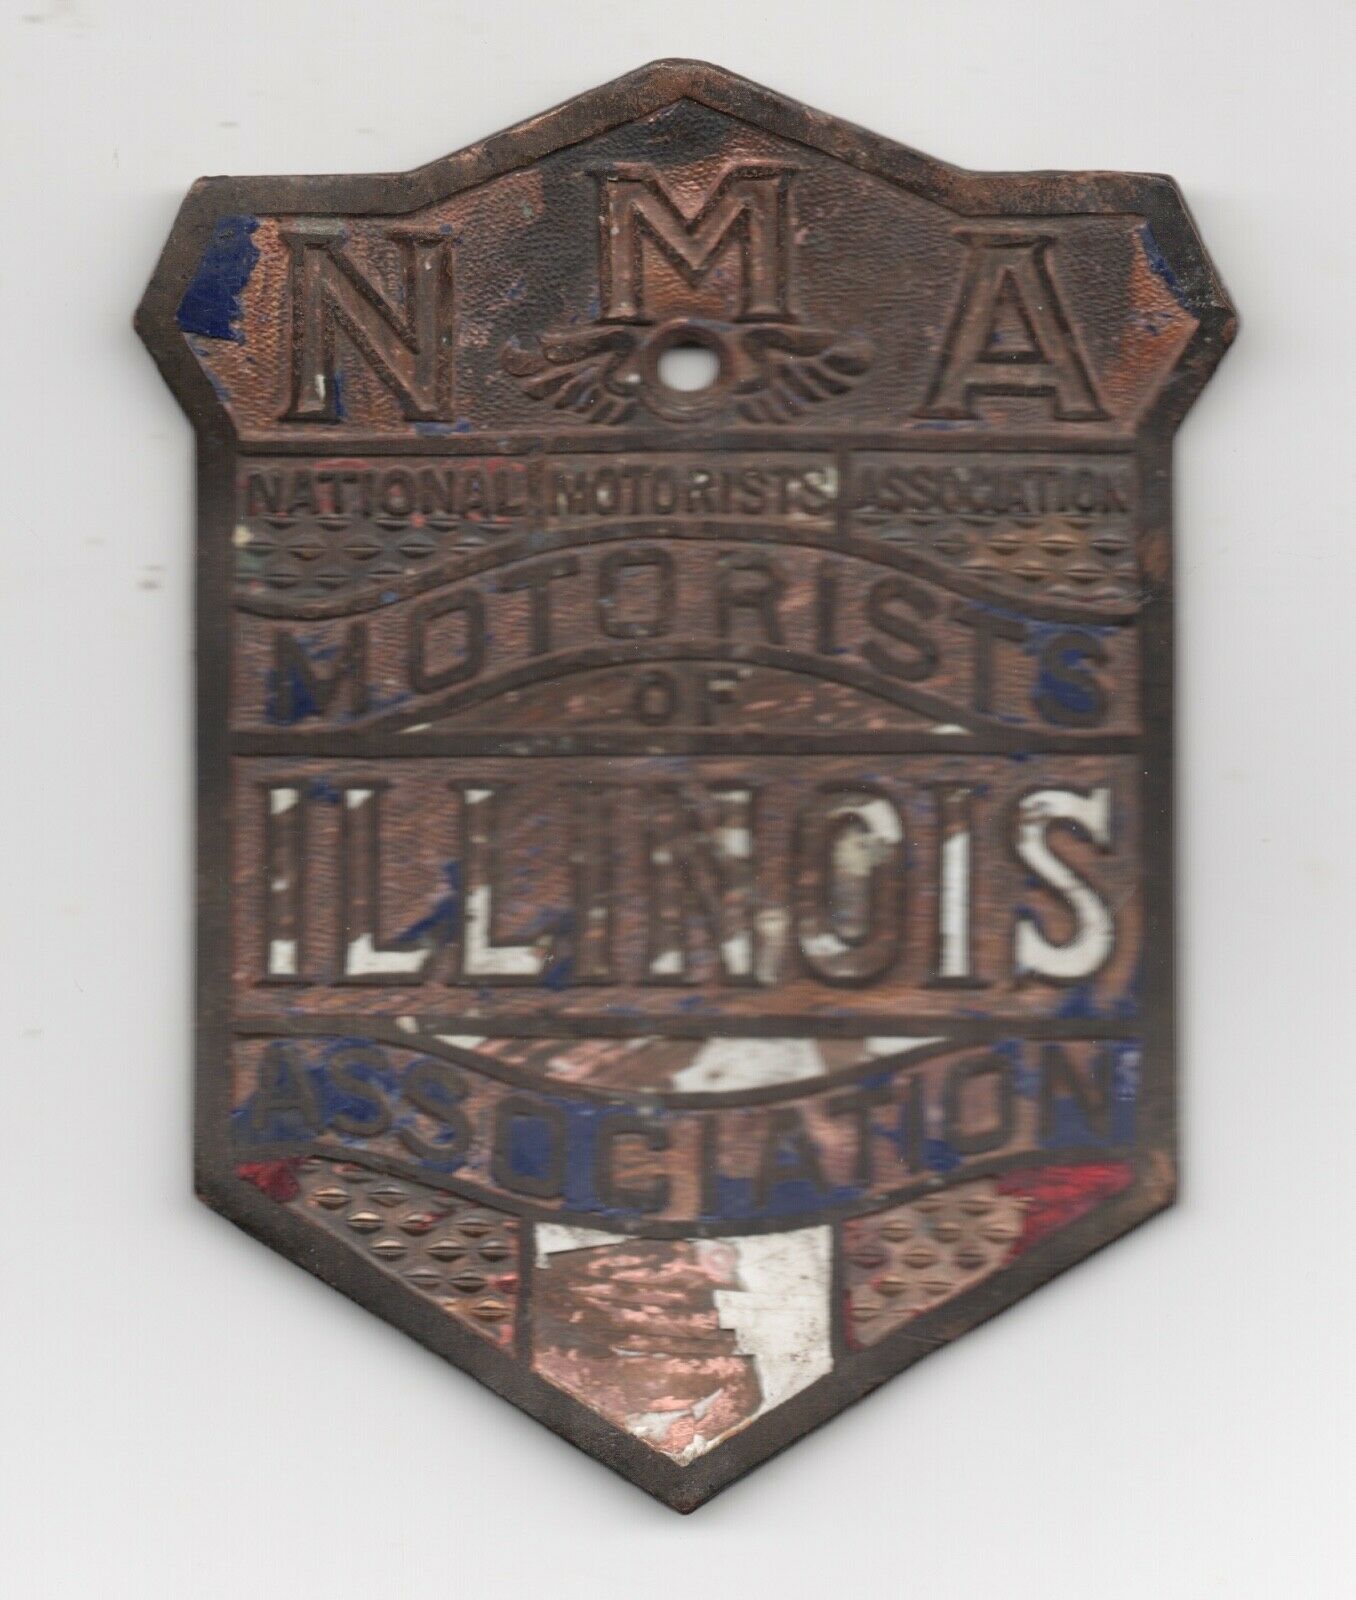 Antique NMA National Motorists Association of Illinois Cast Metal Plaque